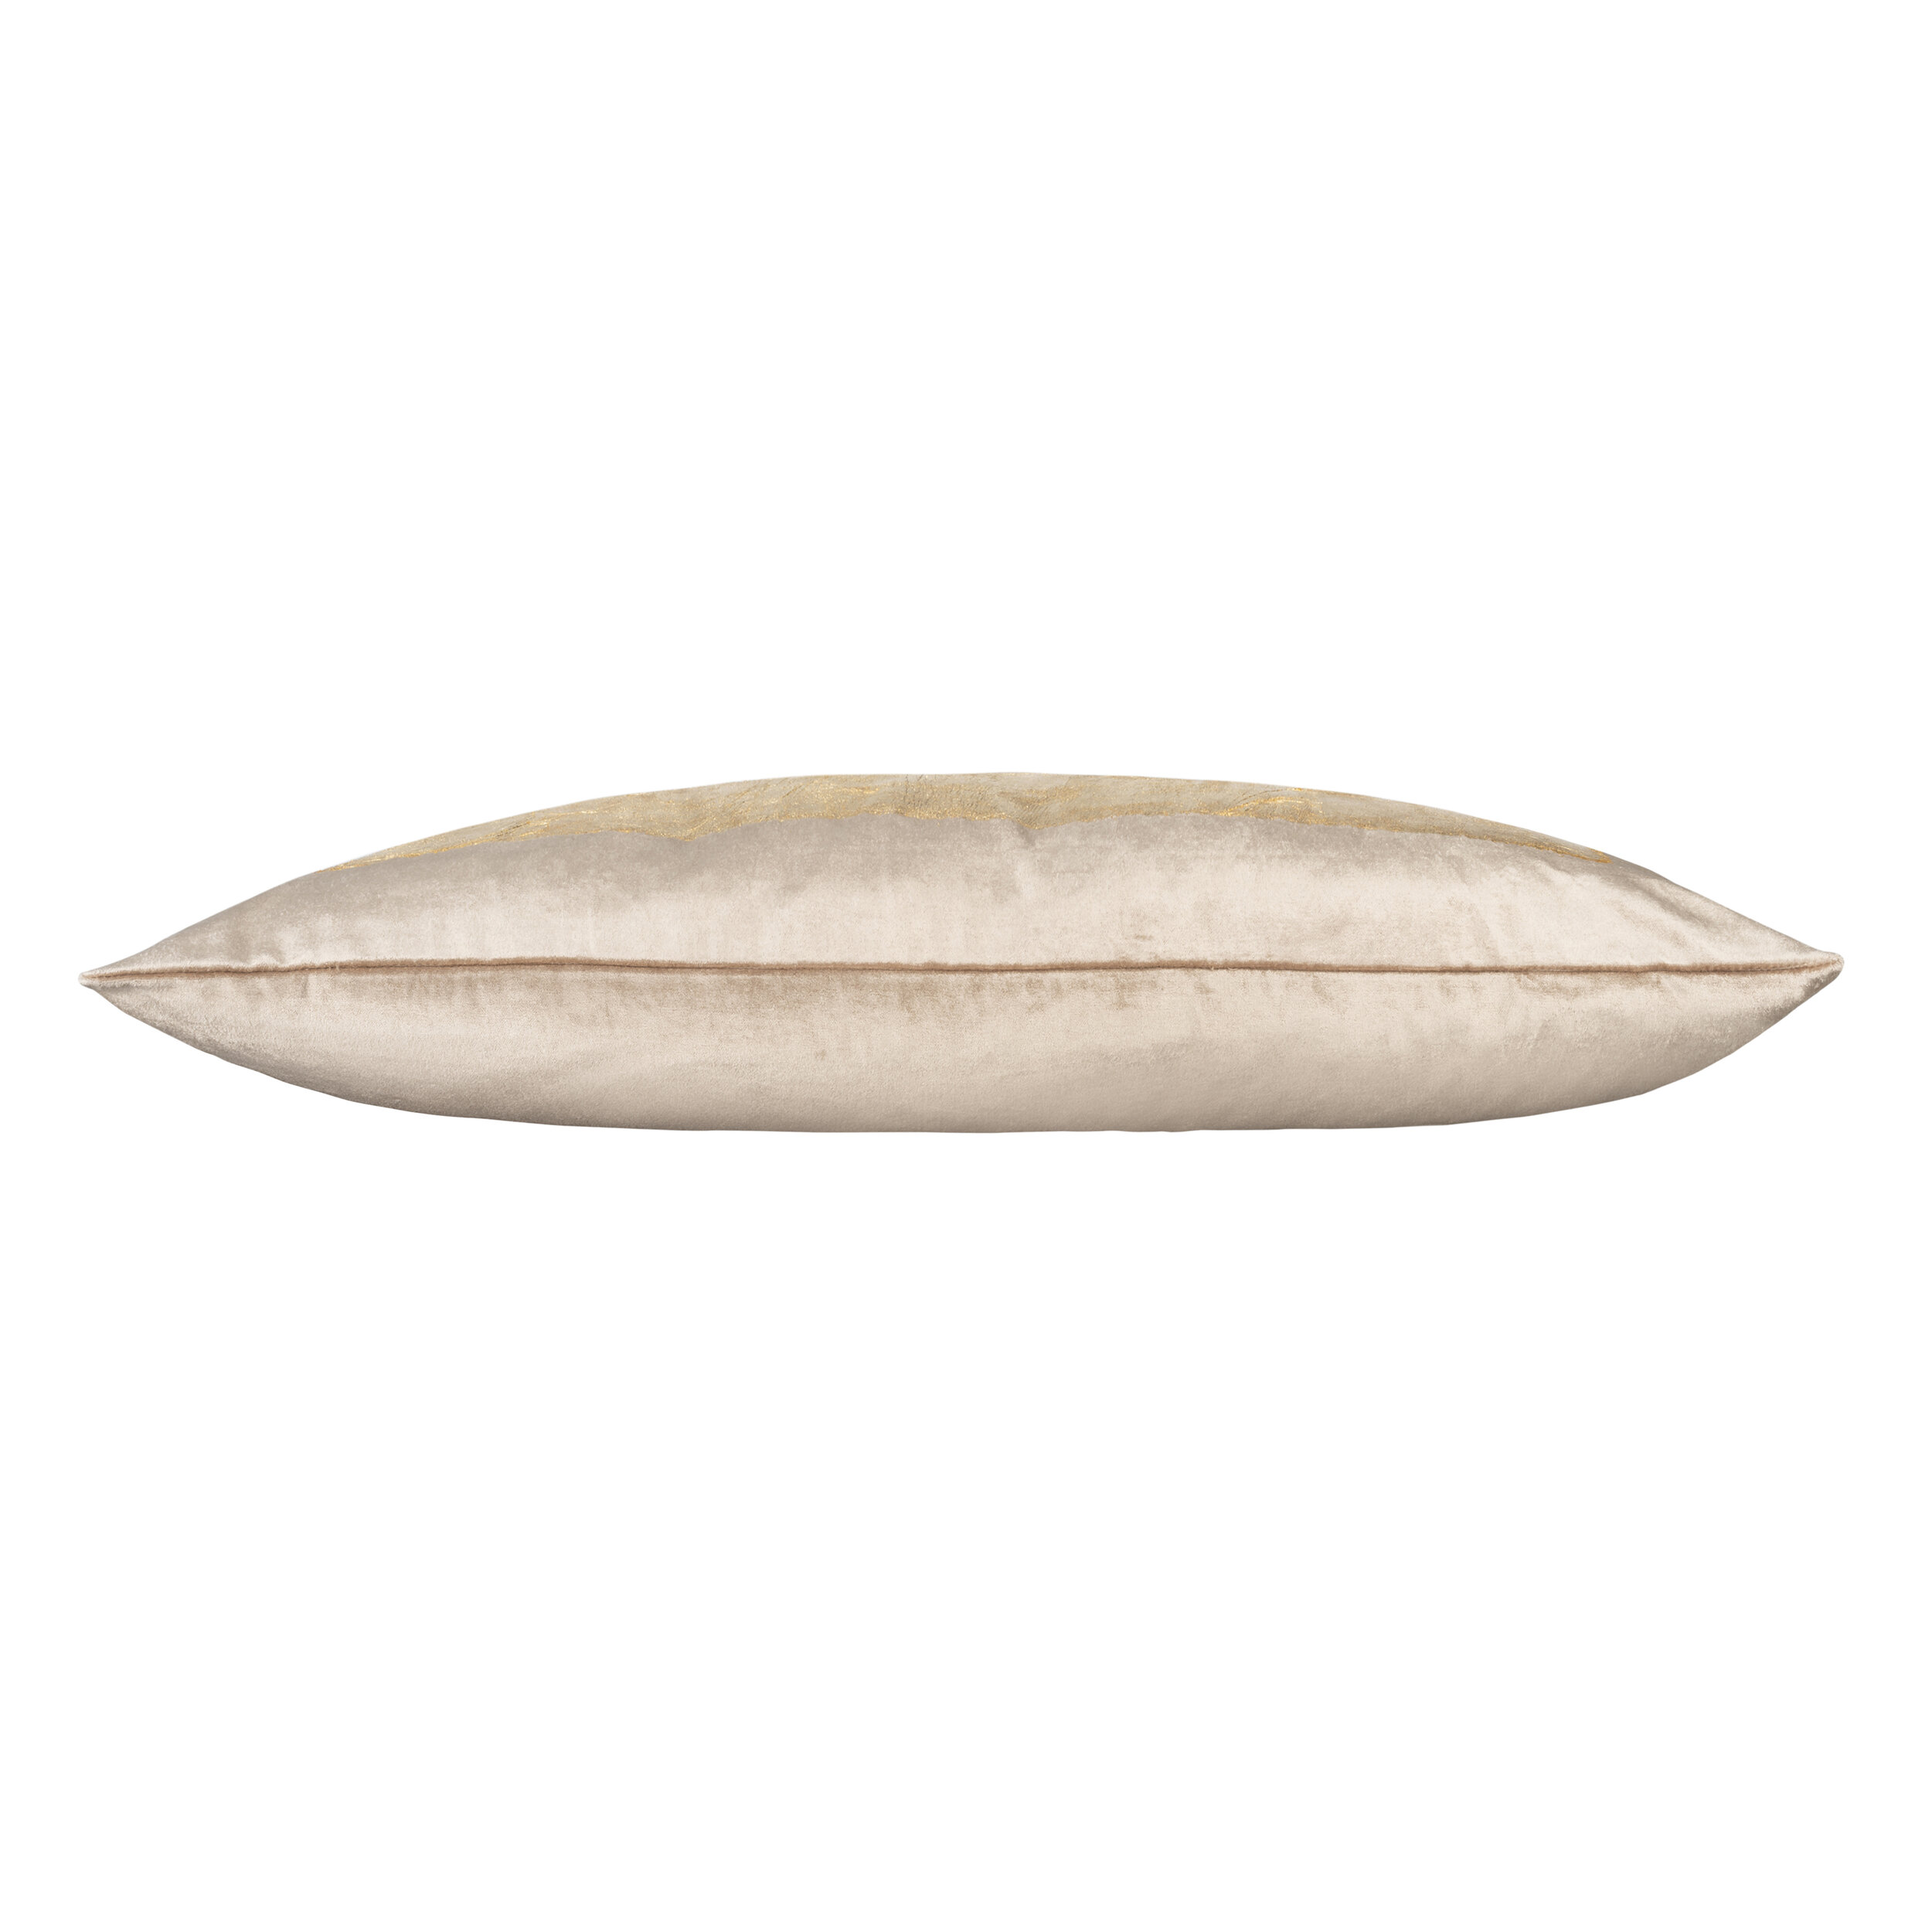 Shop Verona Lumbar Pillow - Gold online - Marie Burgos Collection — Shop  Home Decorative Accessories Online | Marie Burgos Collection